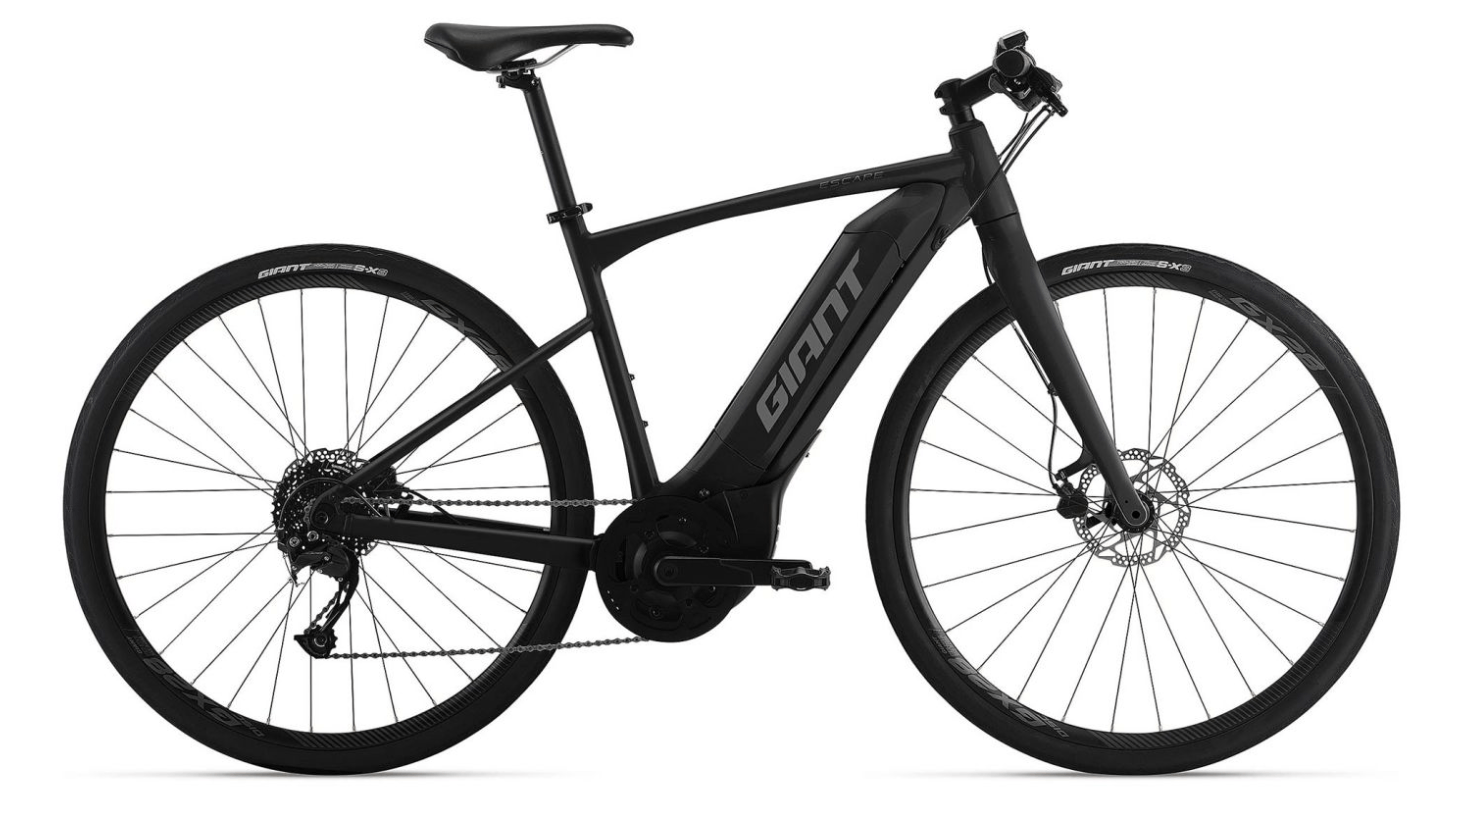 Bike Image